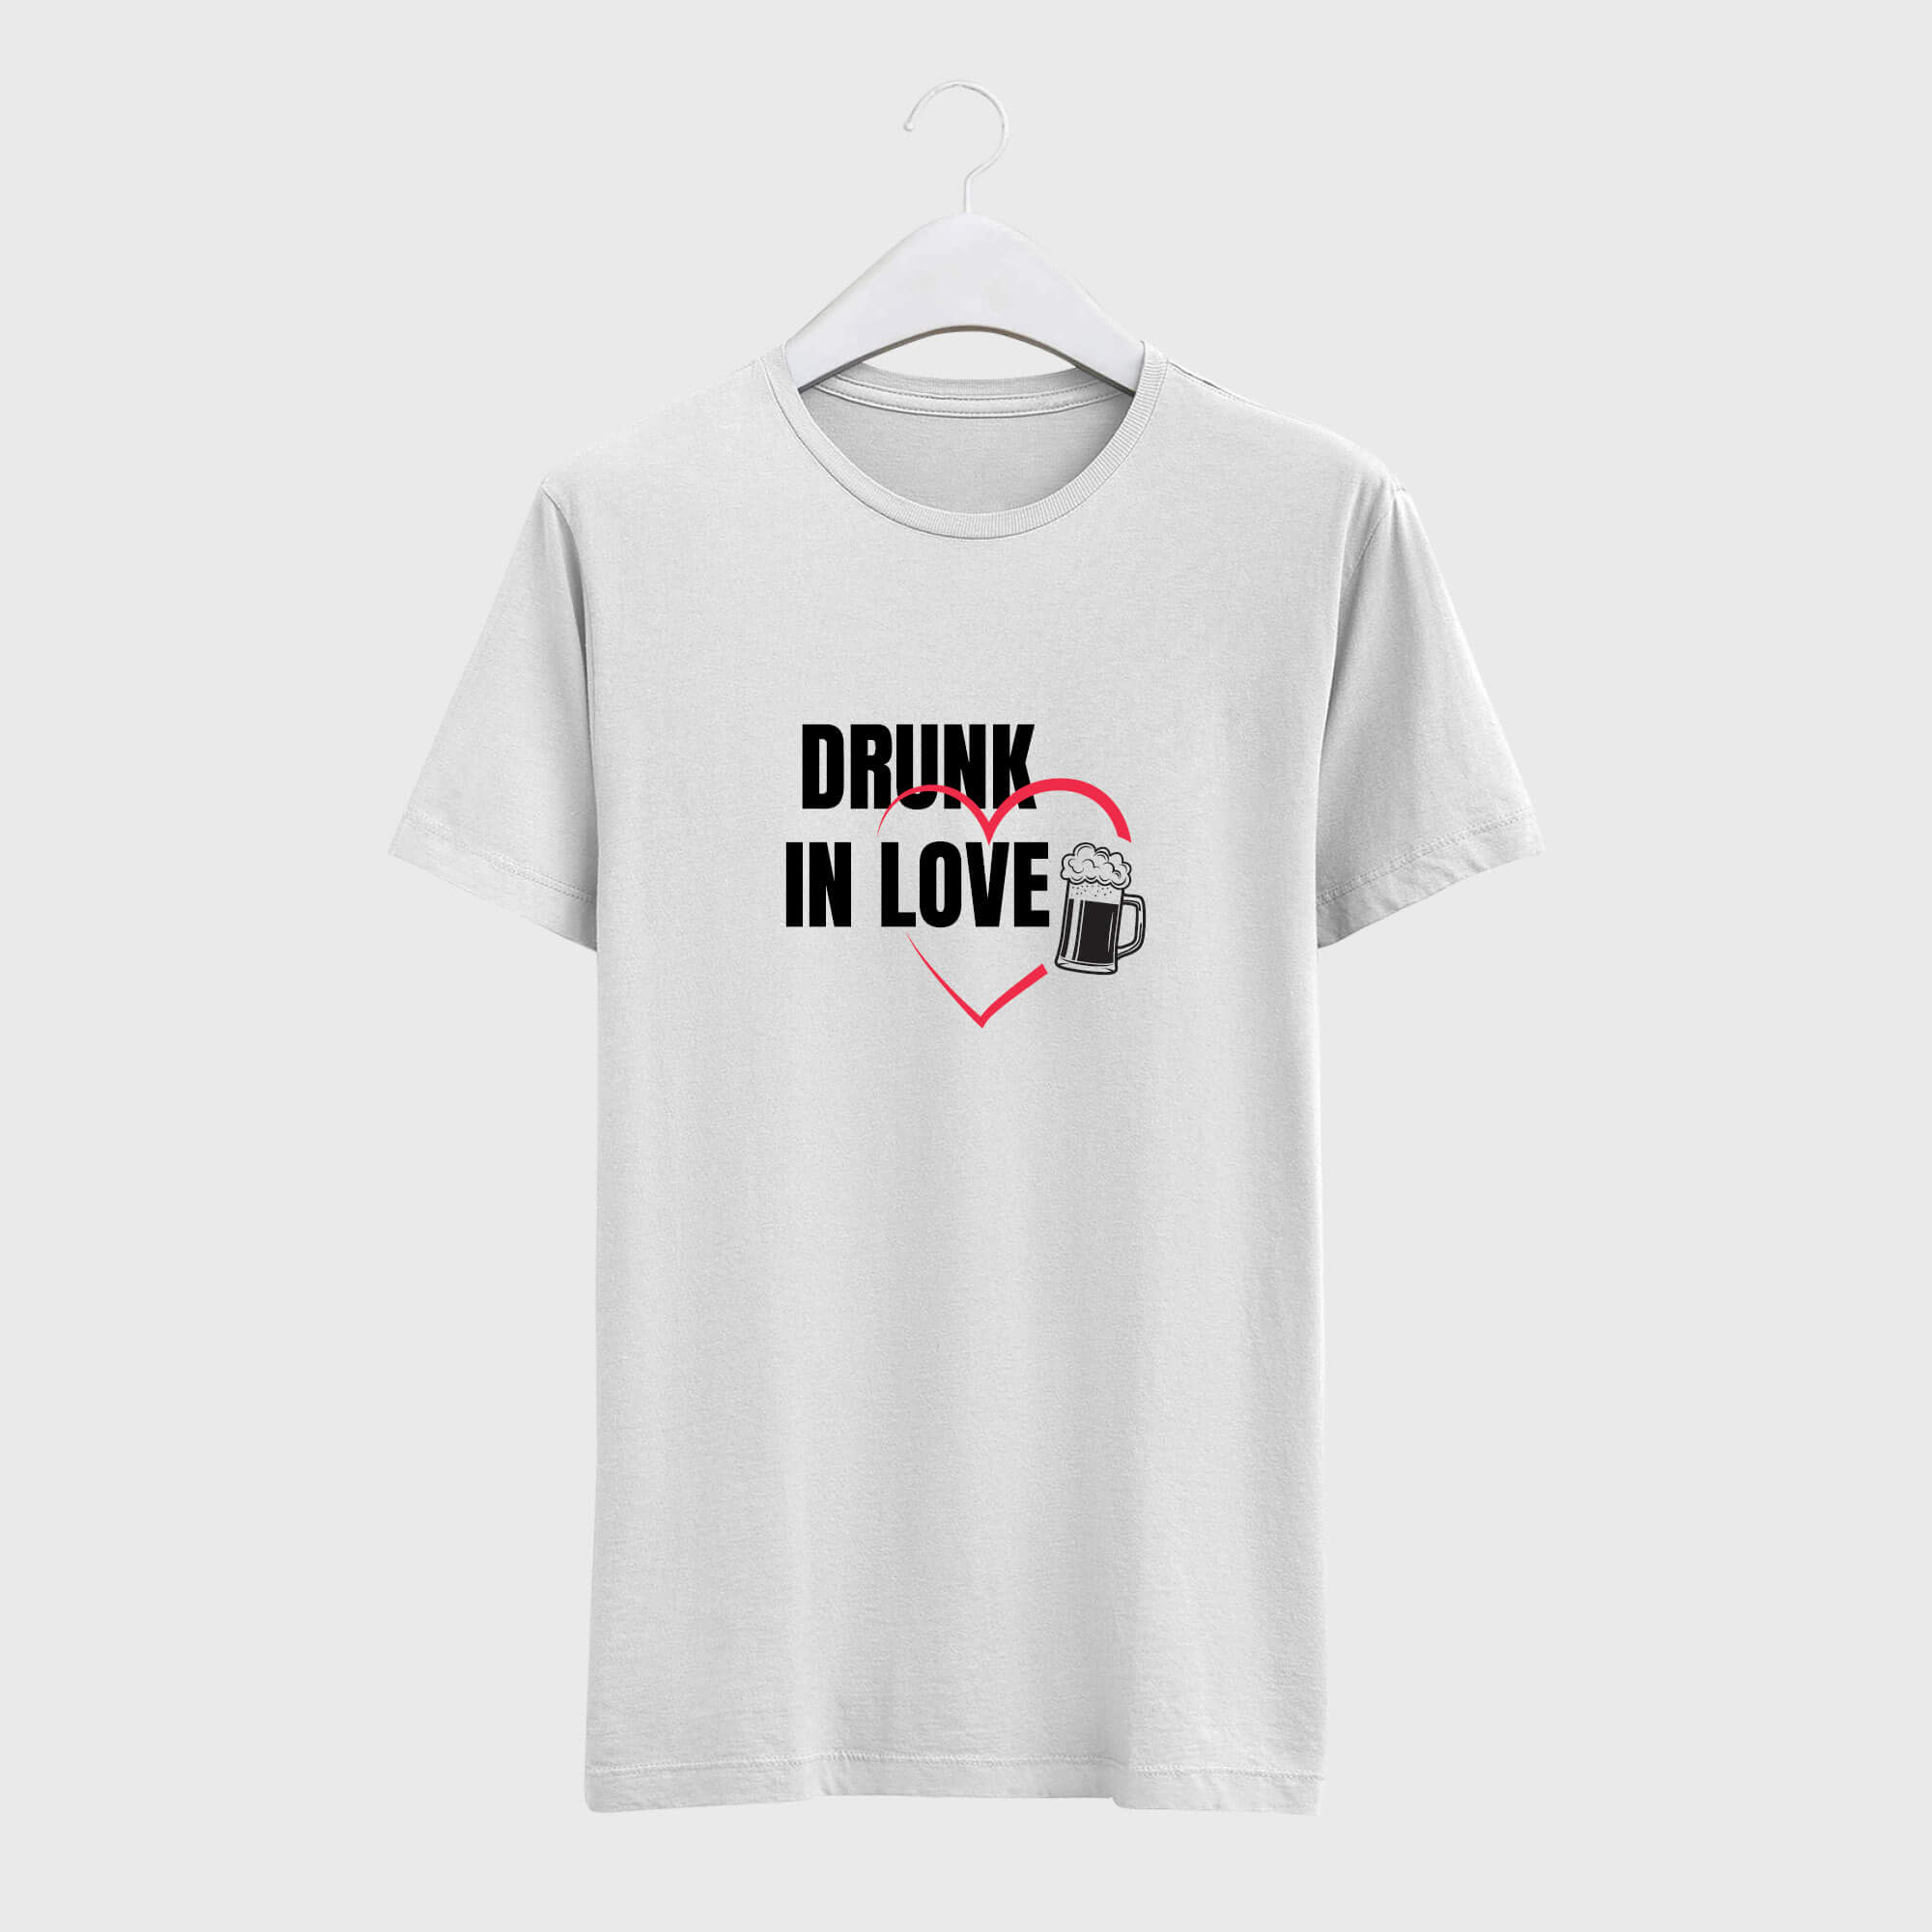 drunk_in_love_.jpg